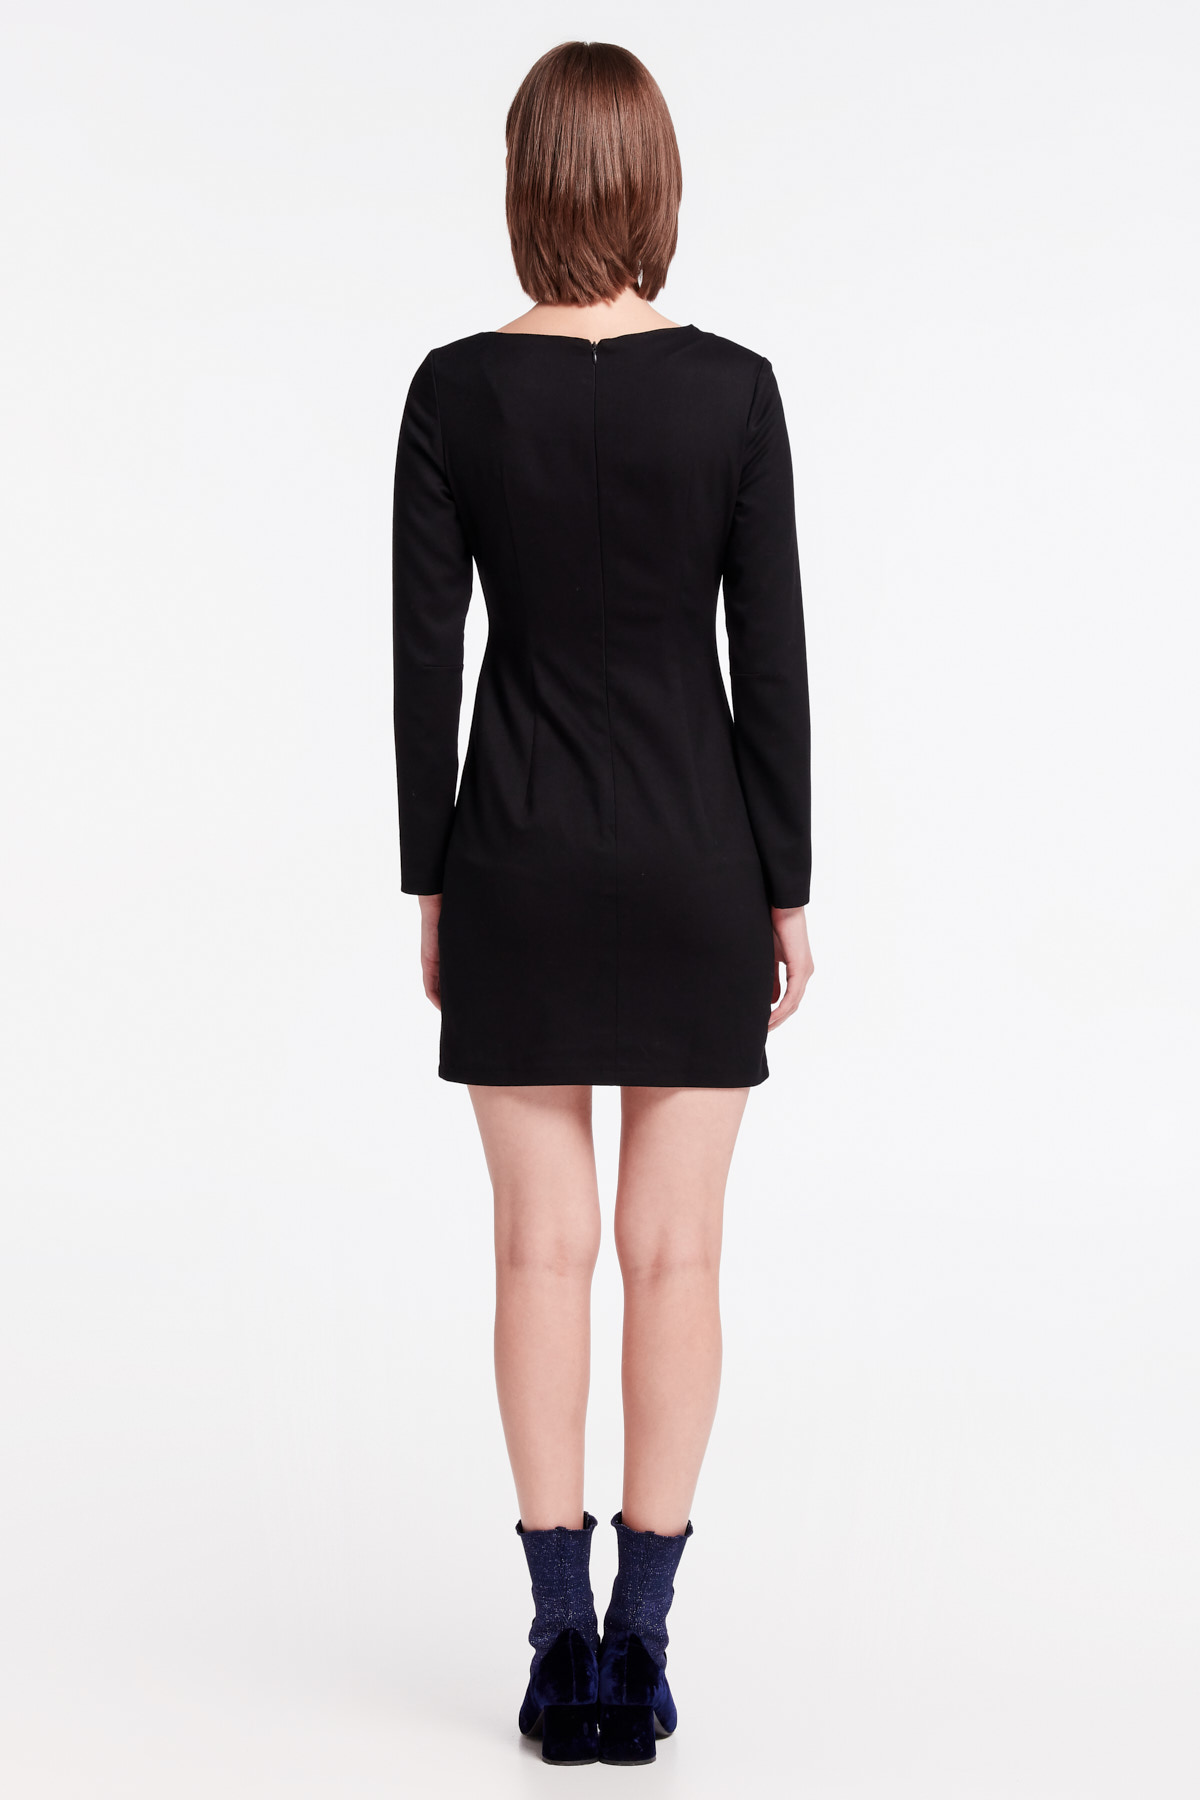 Black dress with above-knee asymmetric cut, photo 6